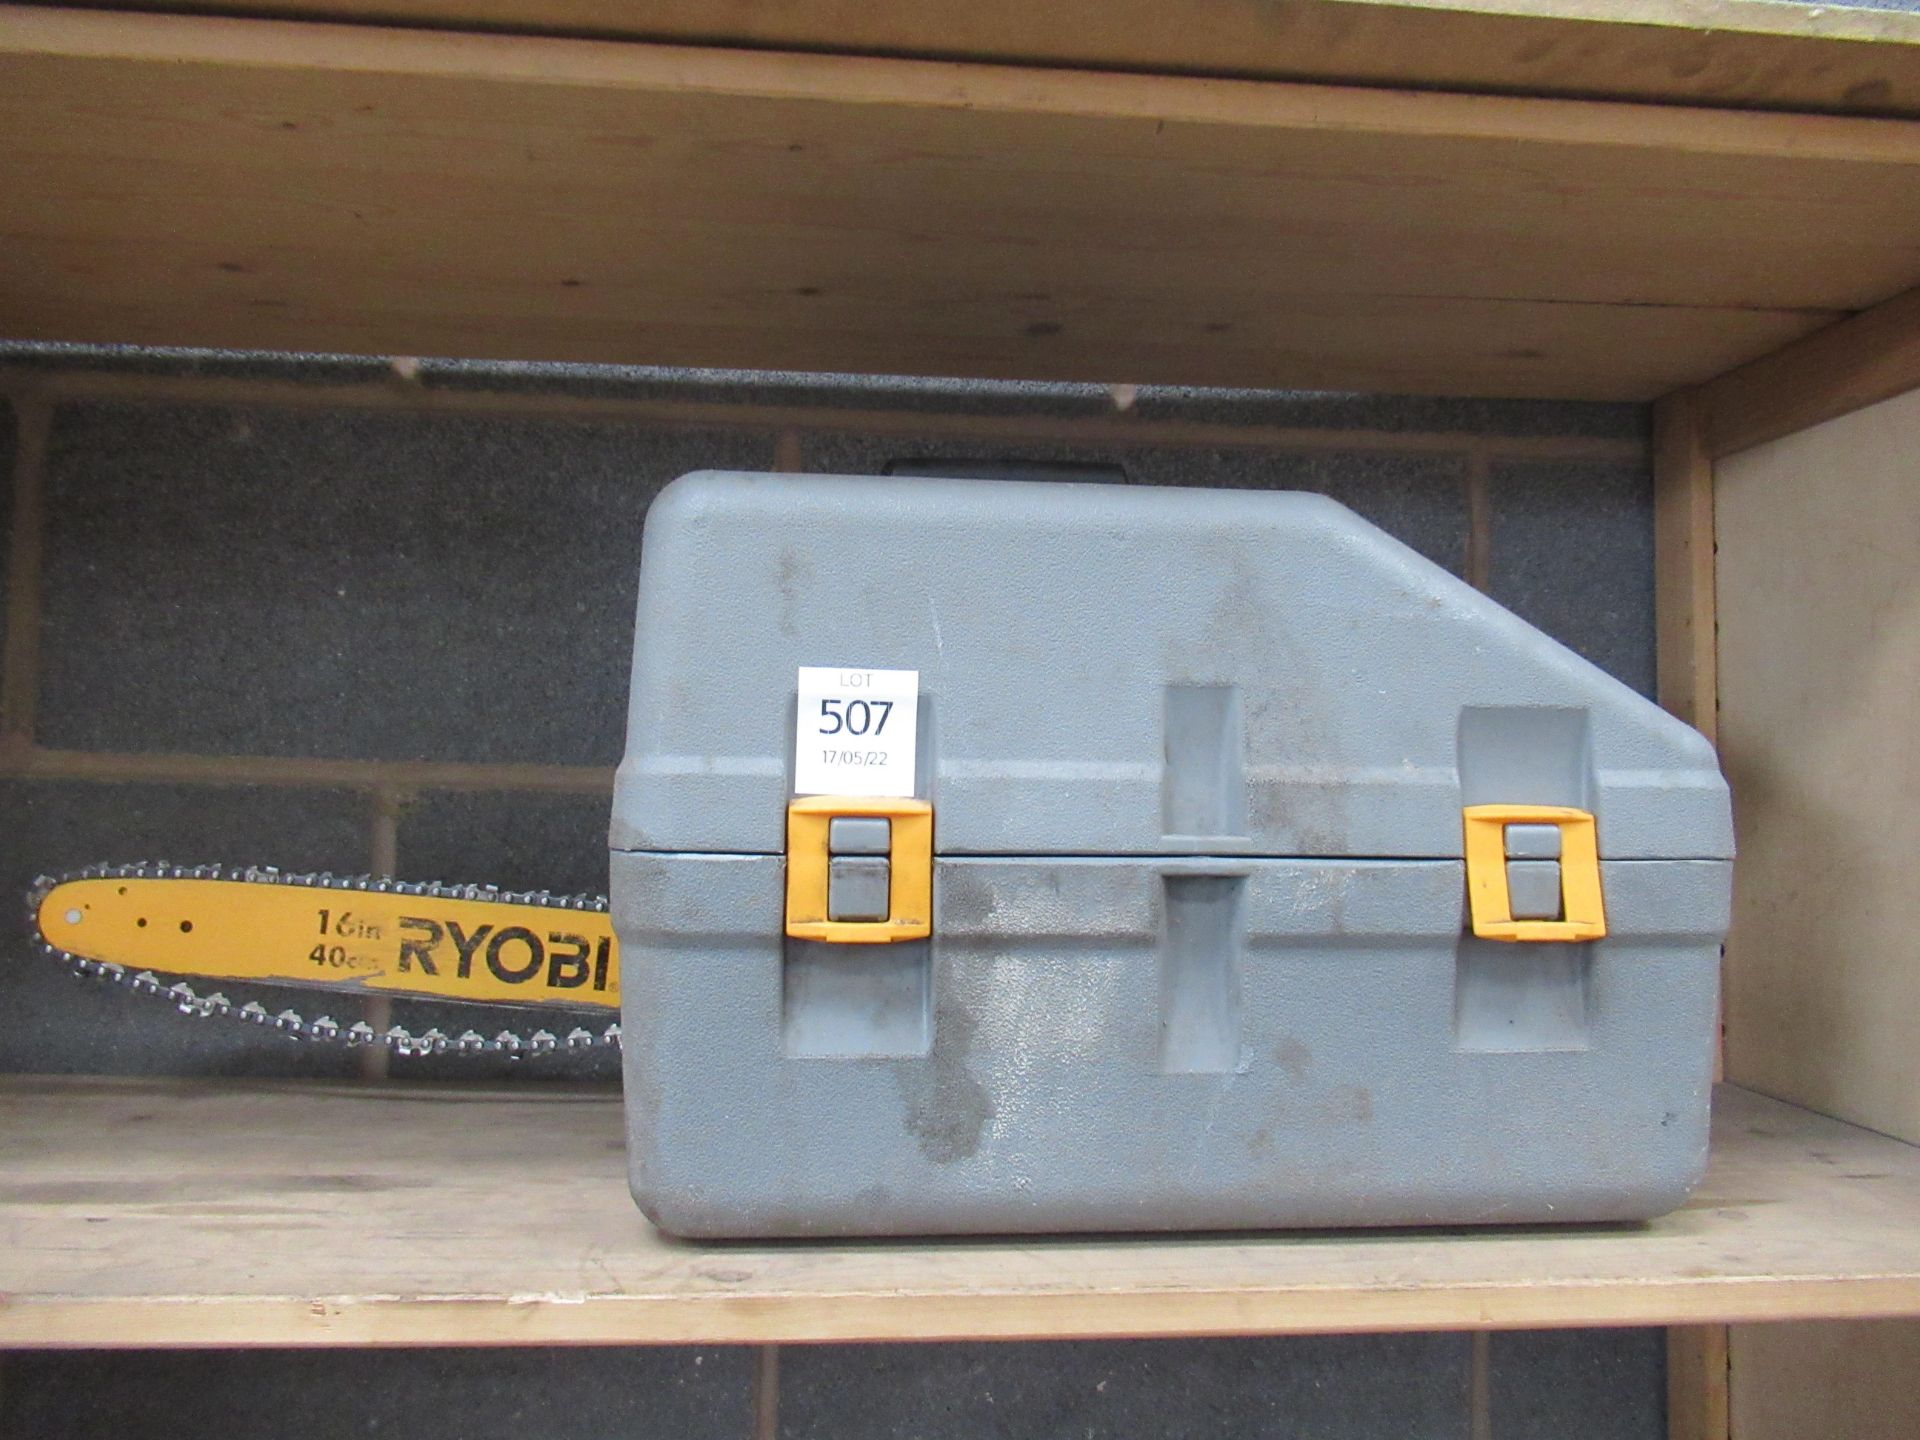 A Ryobi petrol chainsaw with carry case A/F